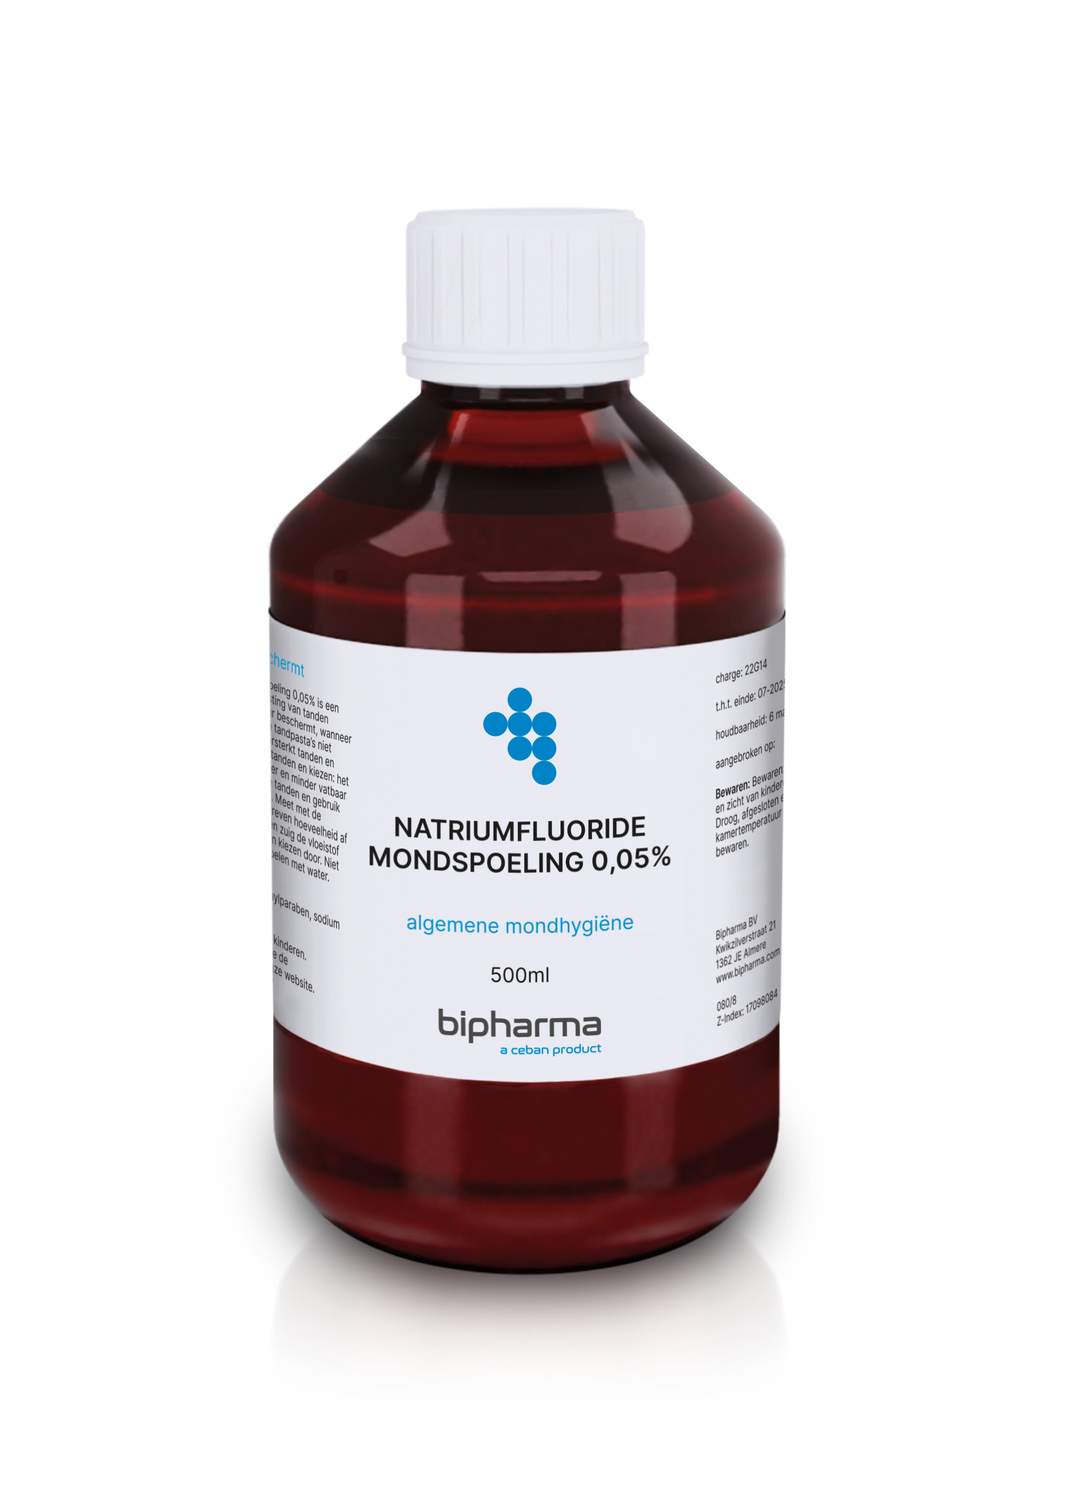 Natriumfluoride Mondspoeling 0,05% Bipharma - BIPHARMA BV - Huidproducten.nl